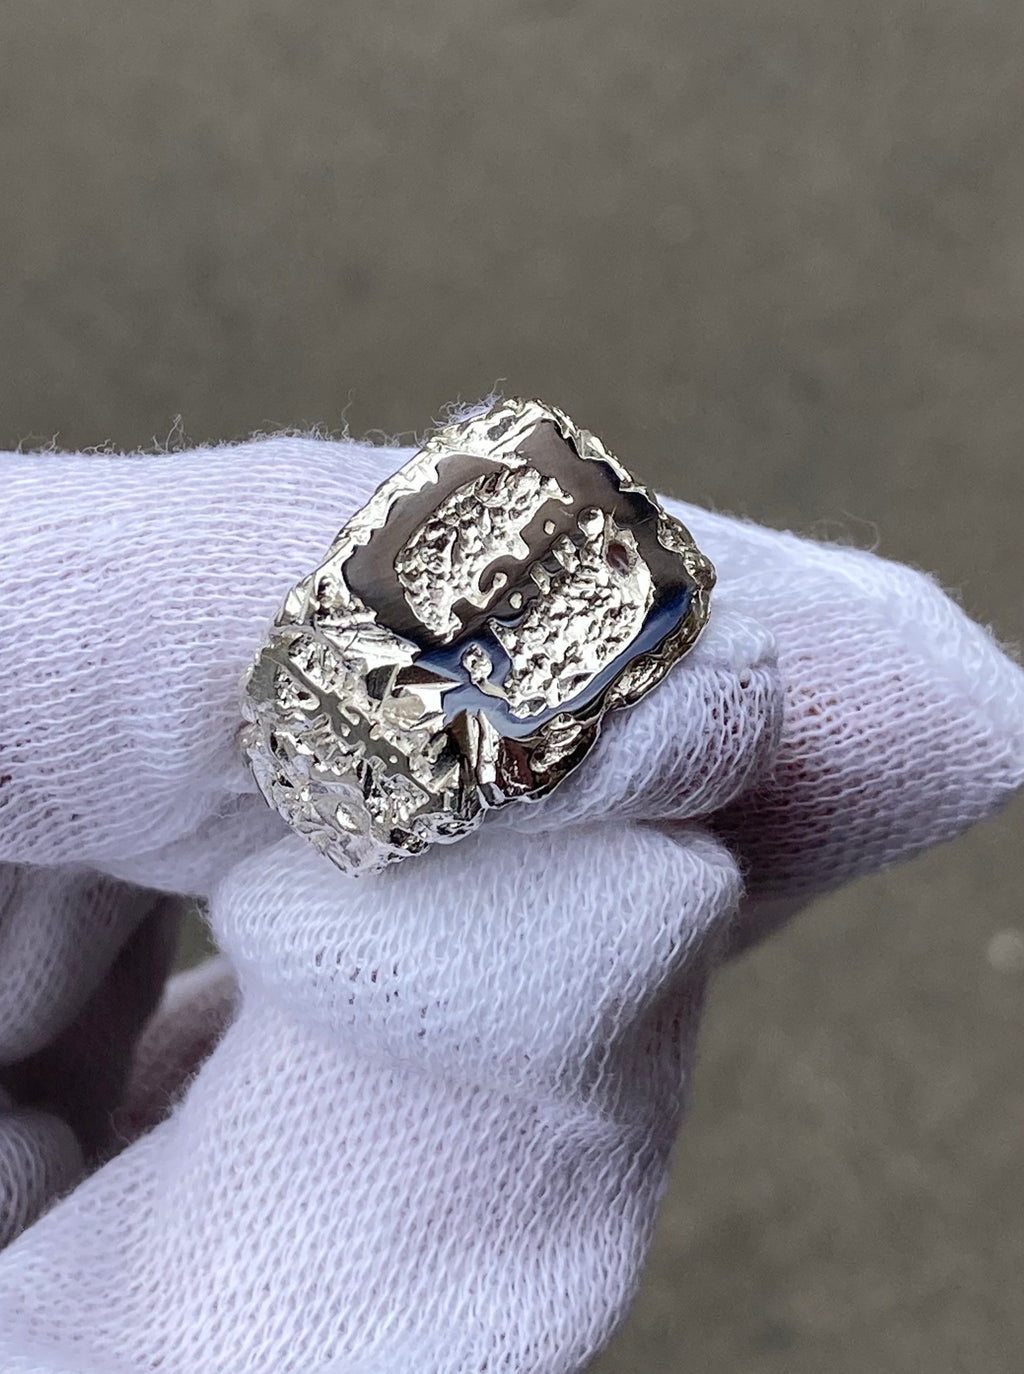 Jan Trophy Ring stříbro (925/1000)